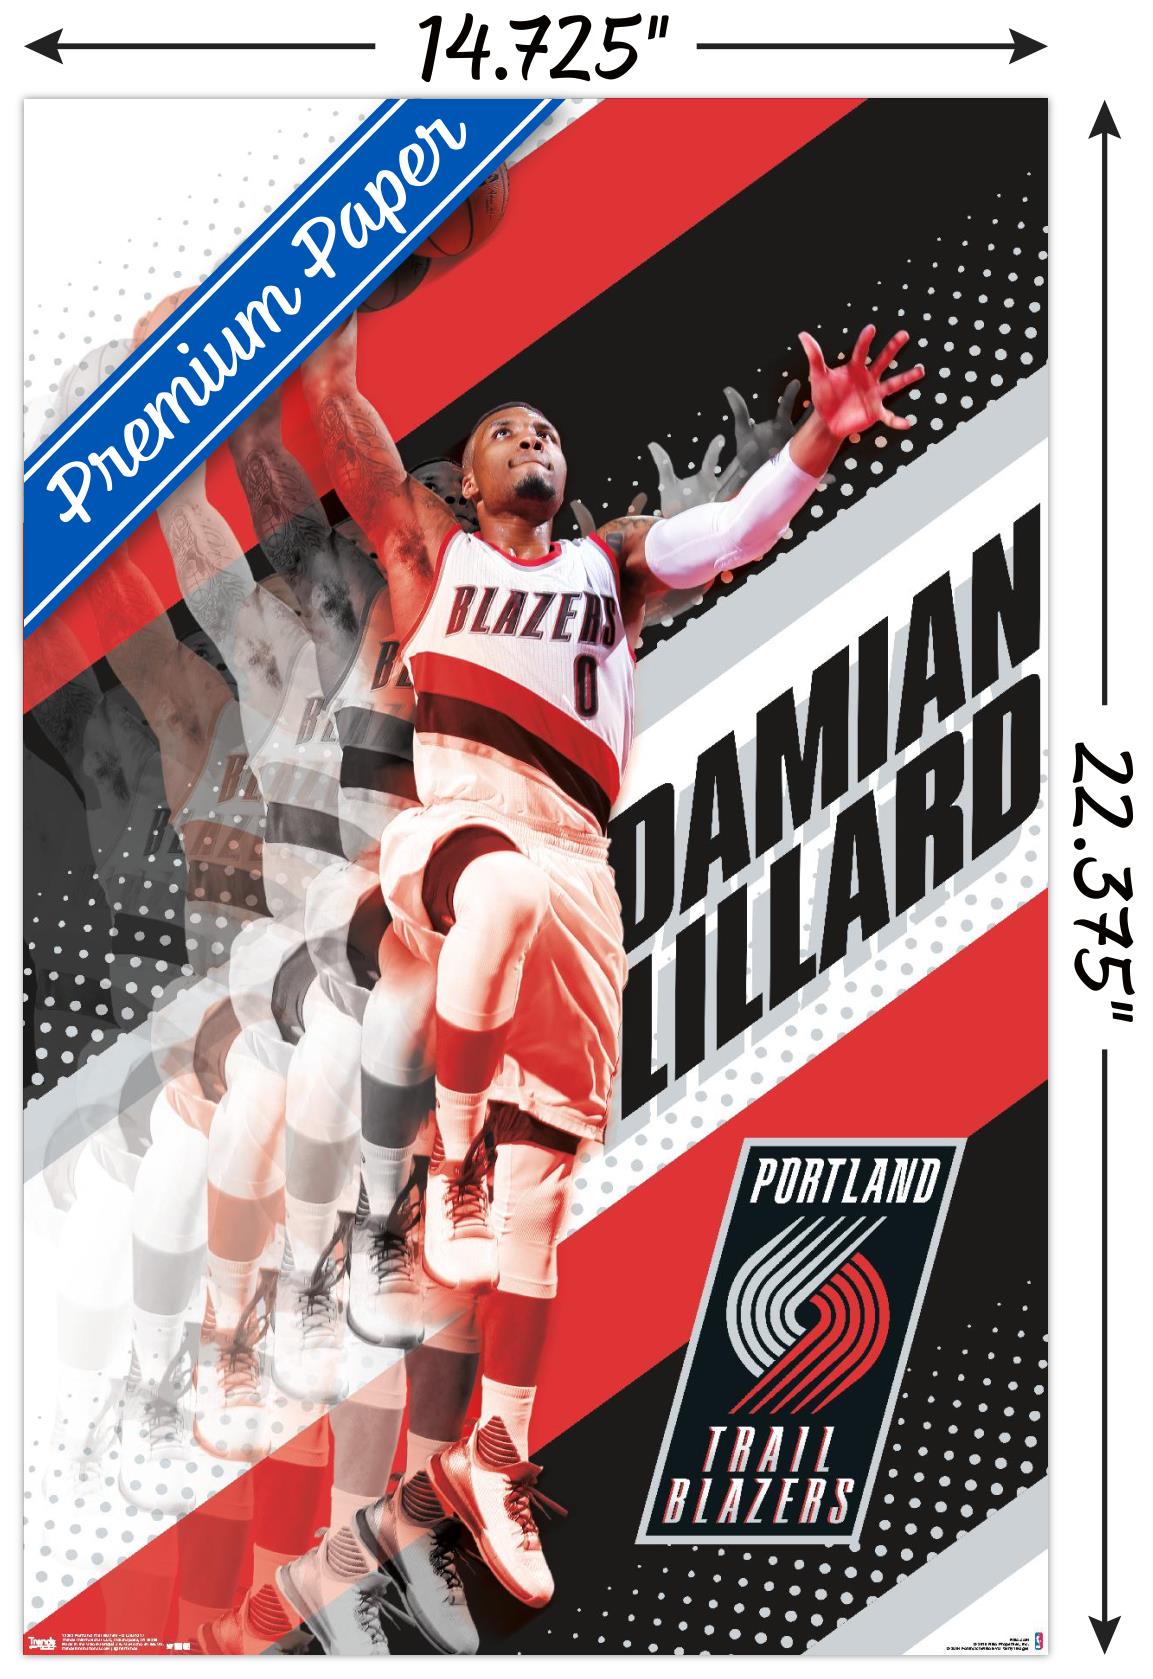 NBA Portland Trail Blazers - Damian Lillard 17 Wall Poster, 14.725" x 22.375" - image 3 of 5